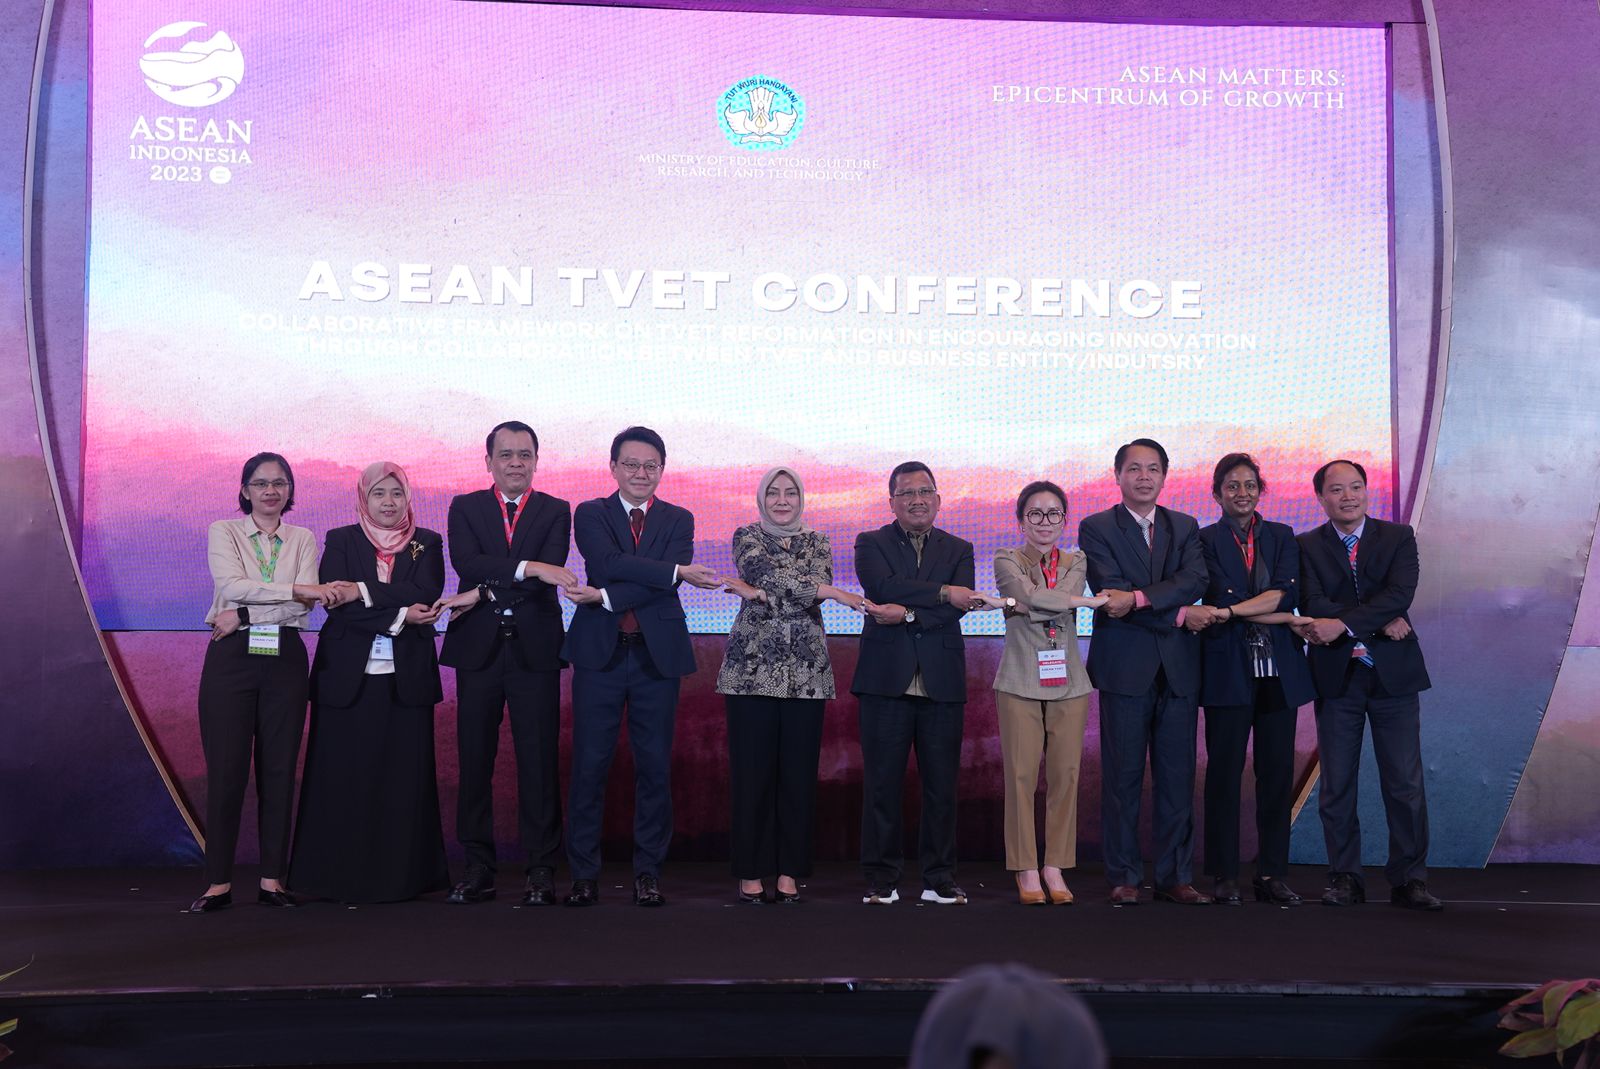 asean-tvet-conference-2023-batam-3-5-juli-2023